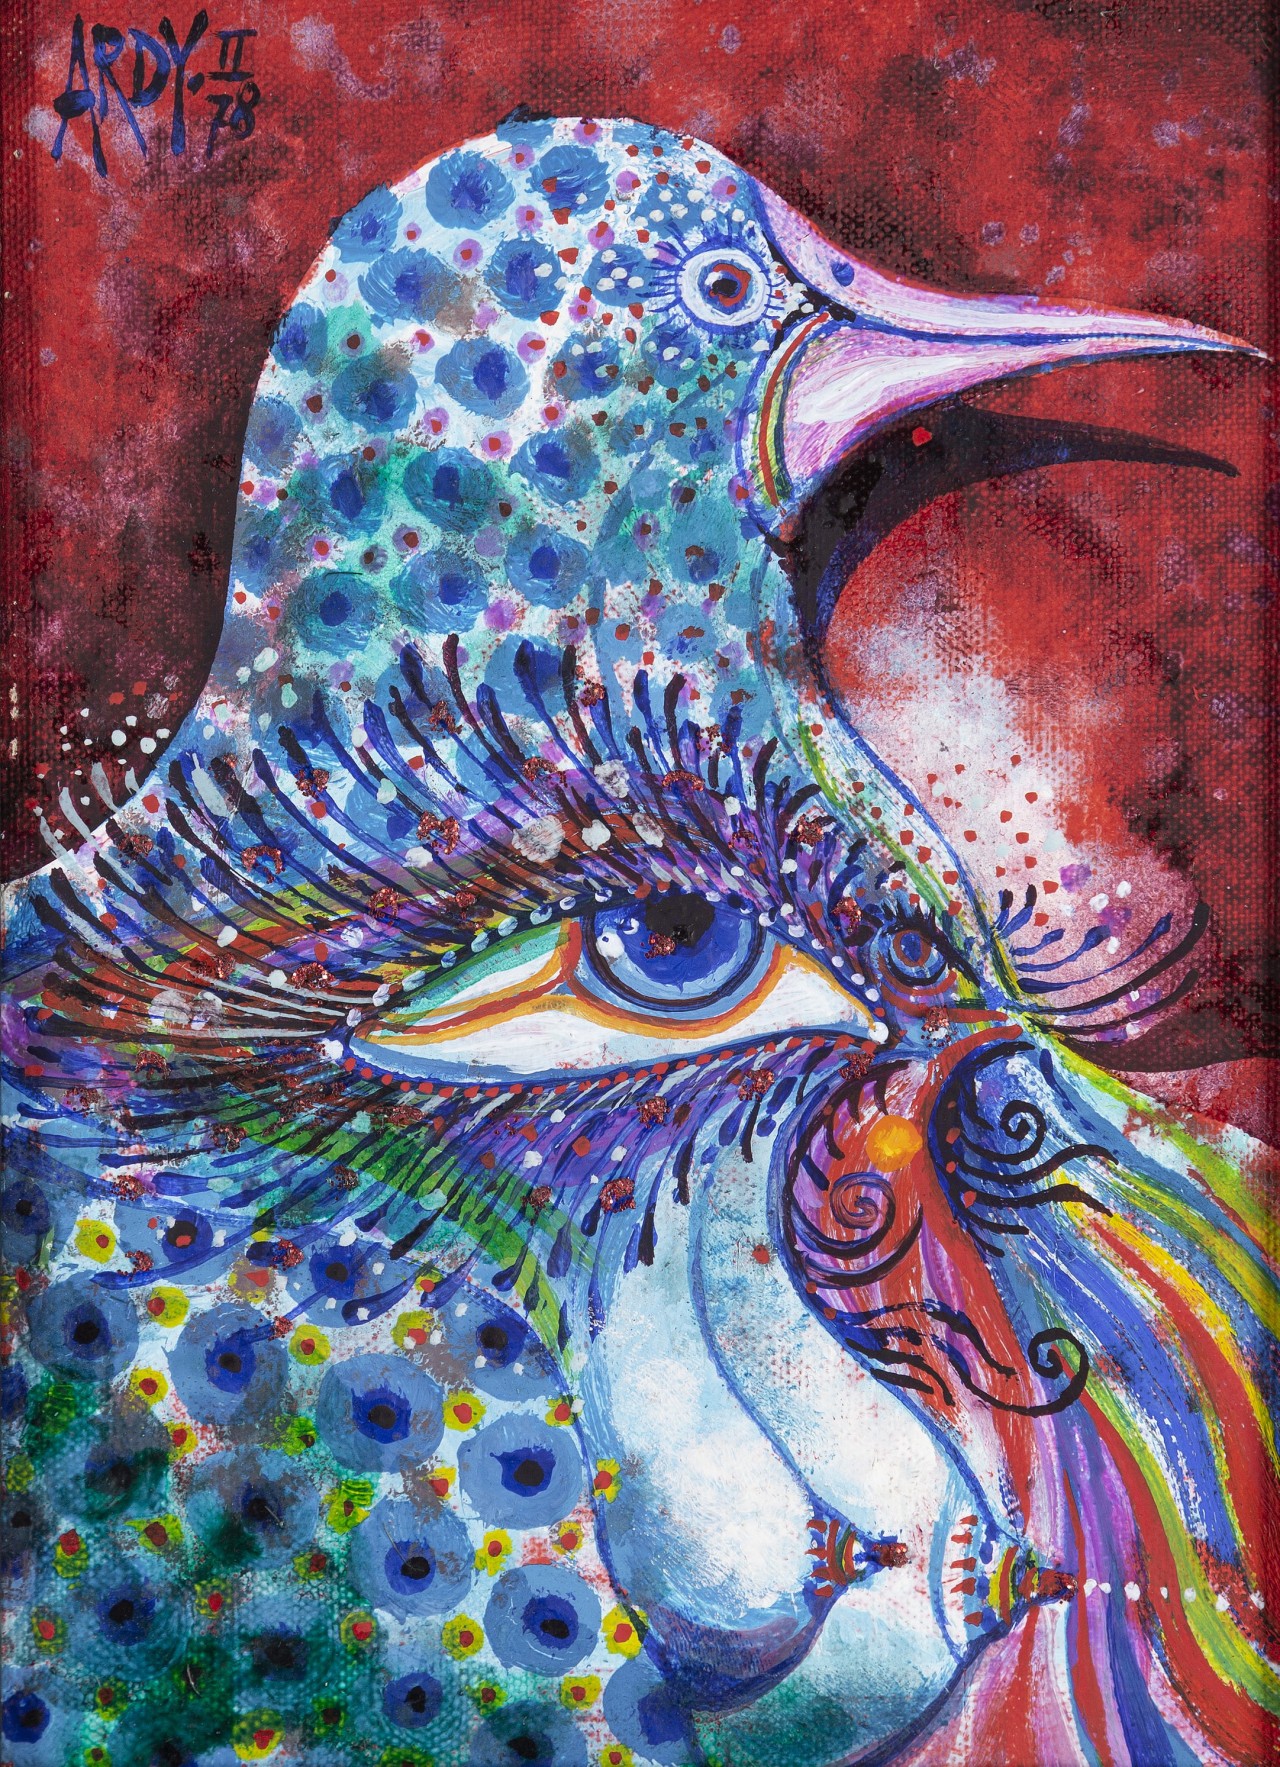 Ardy Strüwer — Dreambird (oil on canvas, 1978)